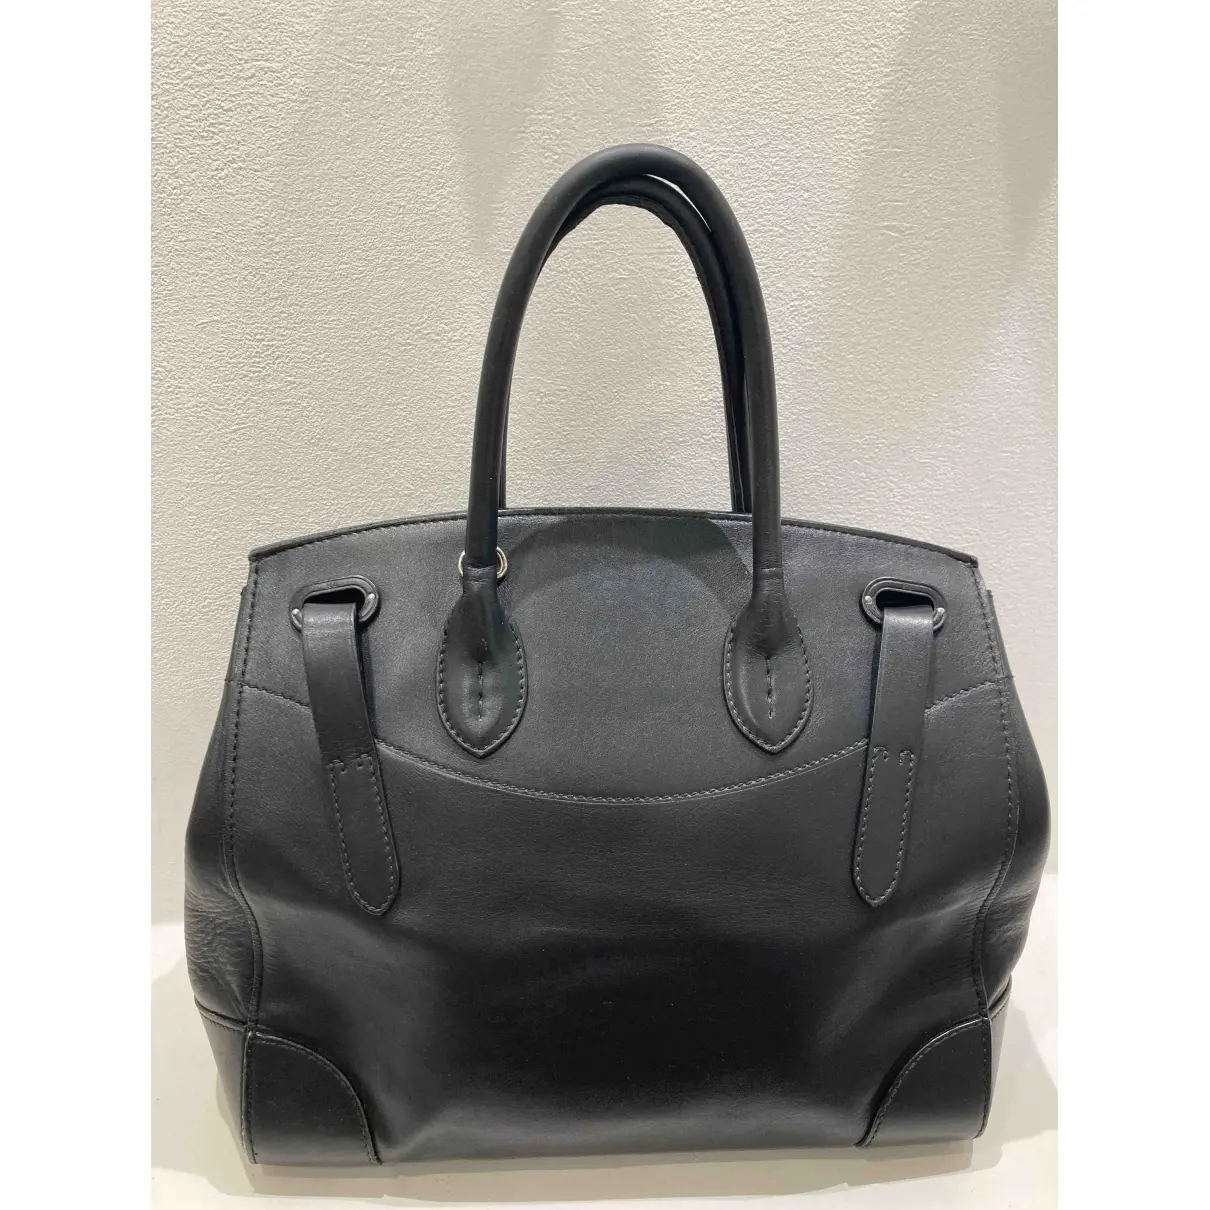 Buy Ralph Lauren Ricky leather handbag online